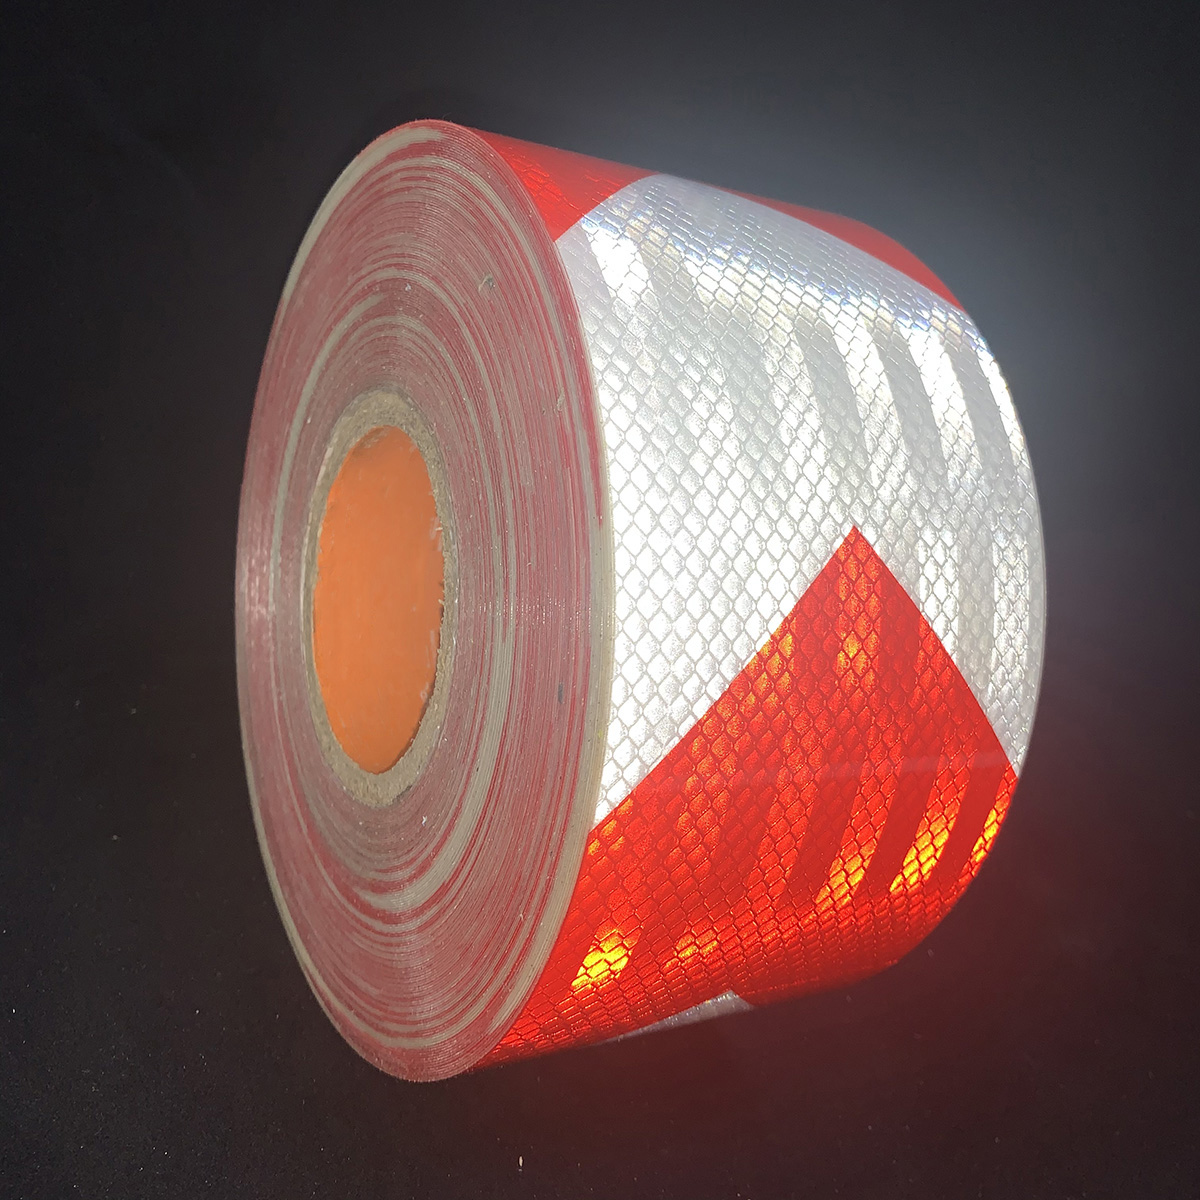 Flecha microprismática PET de 10 cm x 45 m, tipo reflectante, lámina roja + blanca